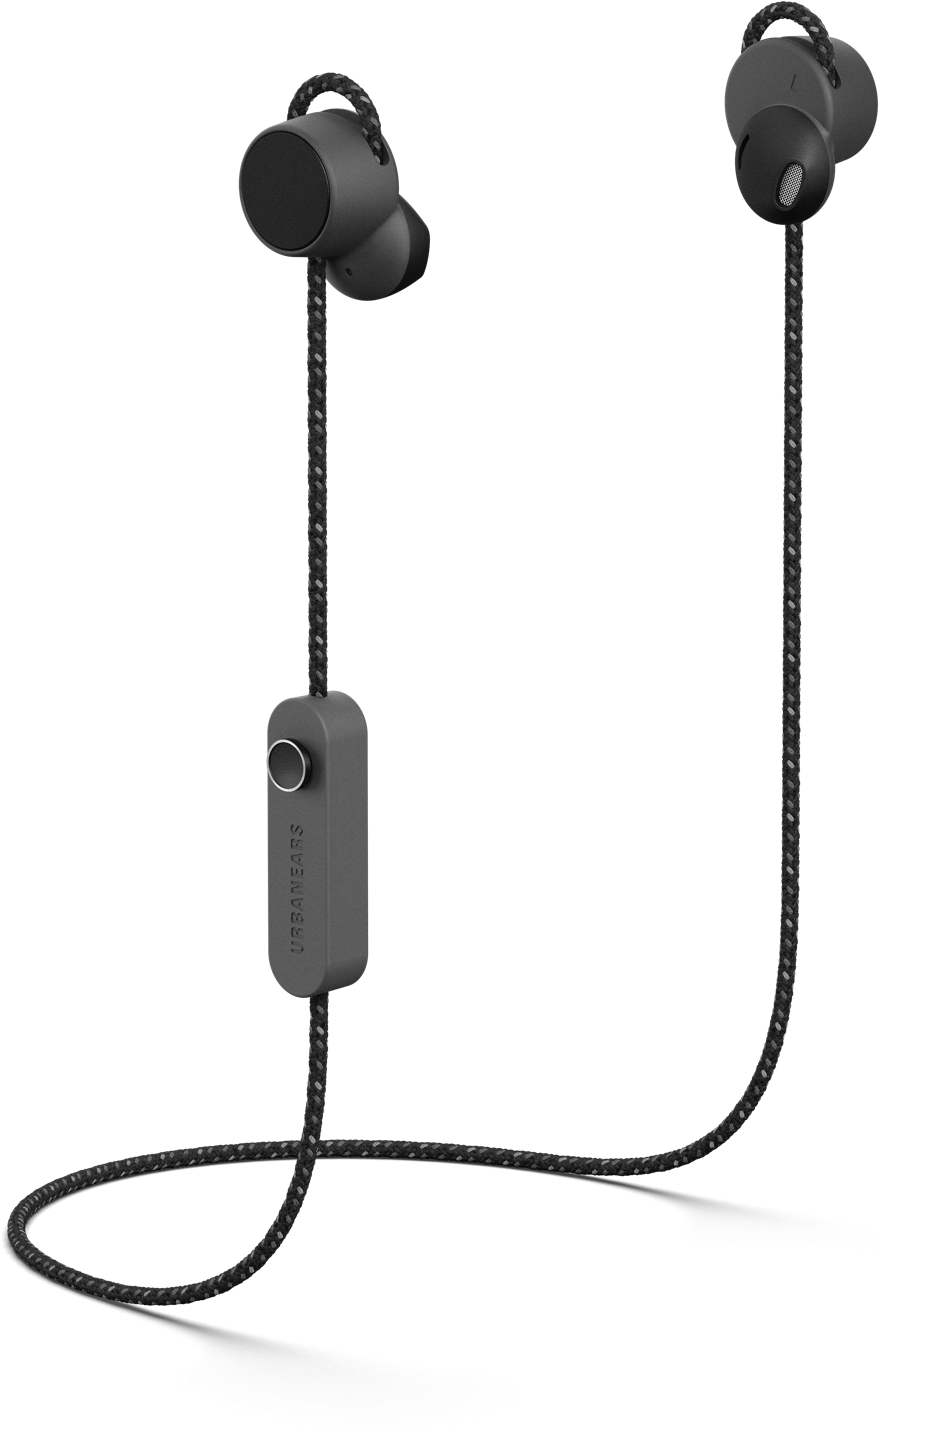 In-Ear Headphones Transparent Images